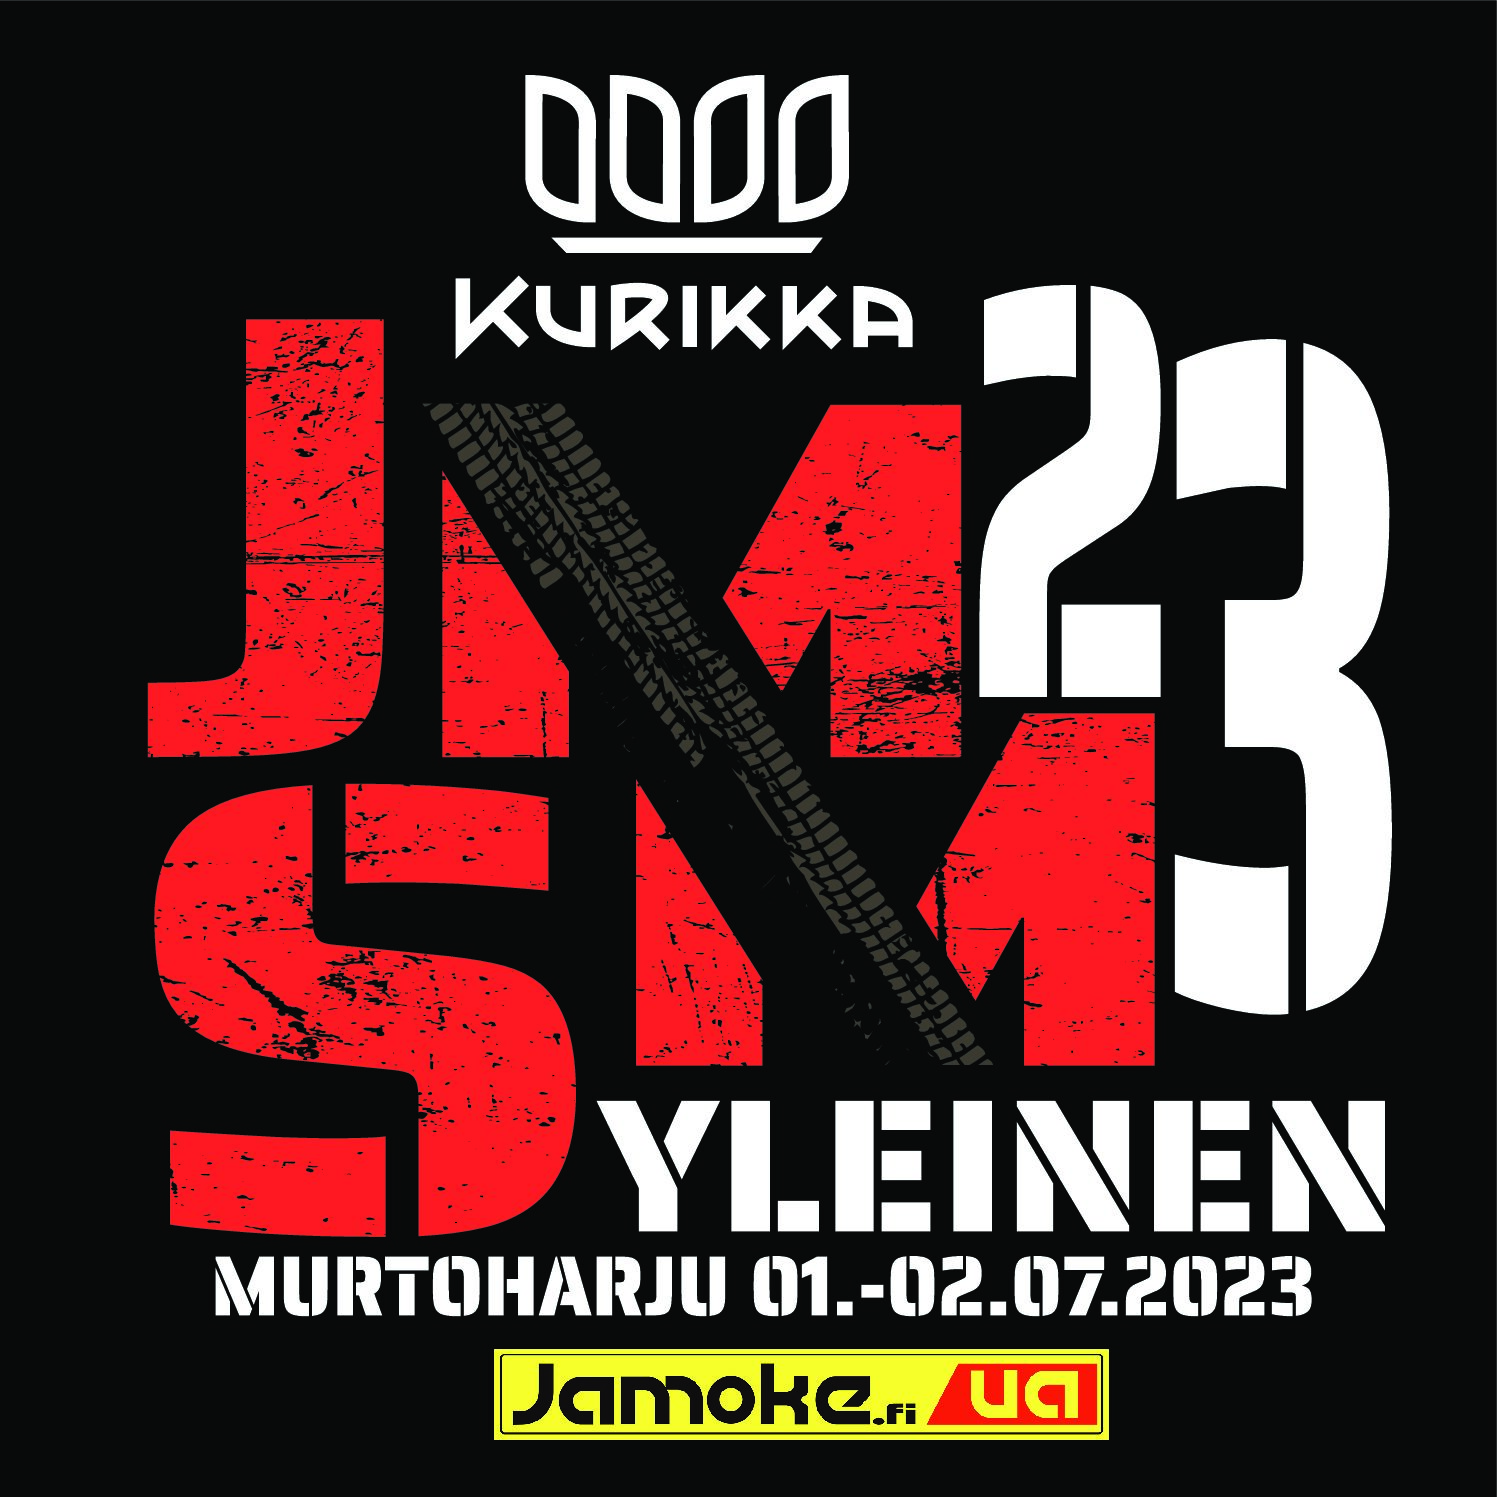 JM SM Yleinen Jalasjärvi 1-2.7.2023